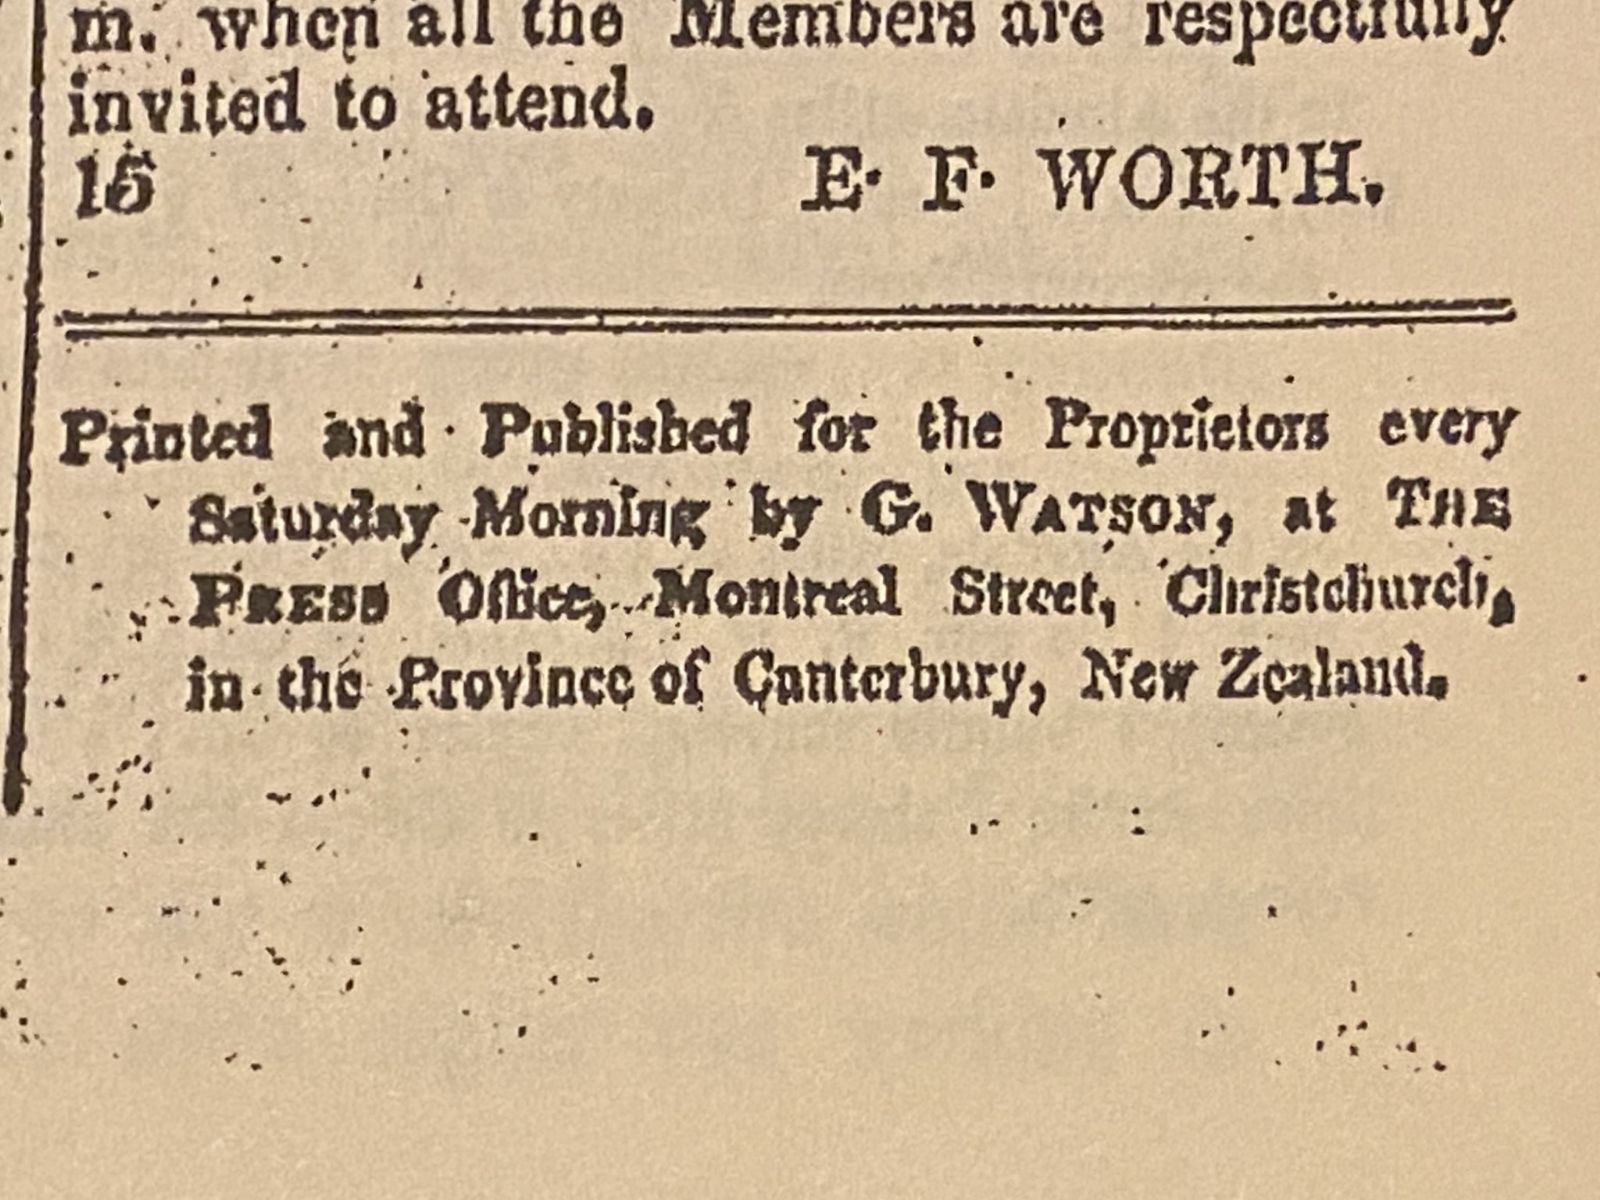 OLD NEWSPAPER: Christchurch Press, Vol 1-Vol 1, 25 May 1861